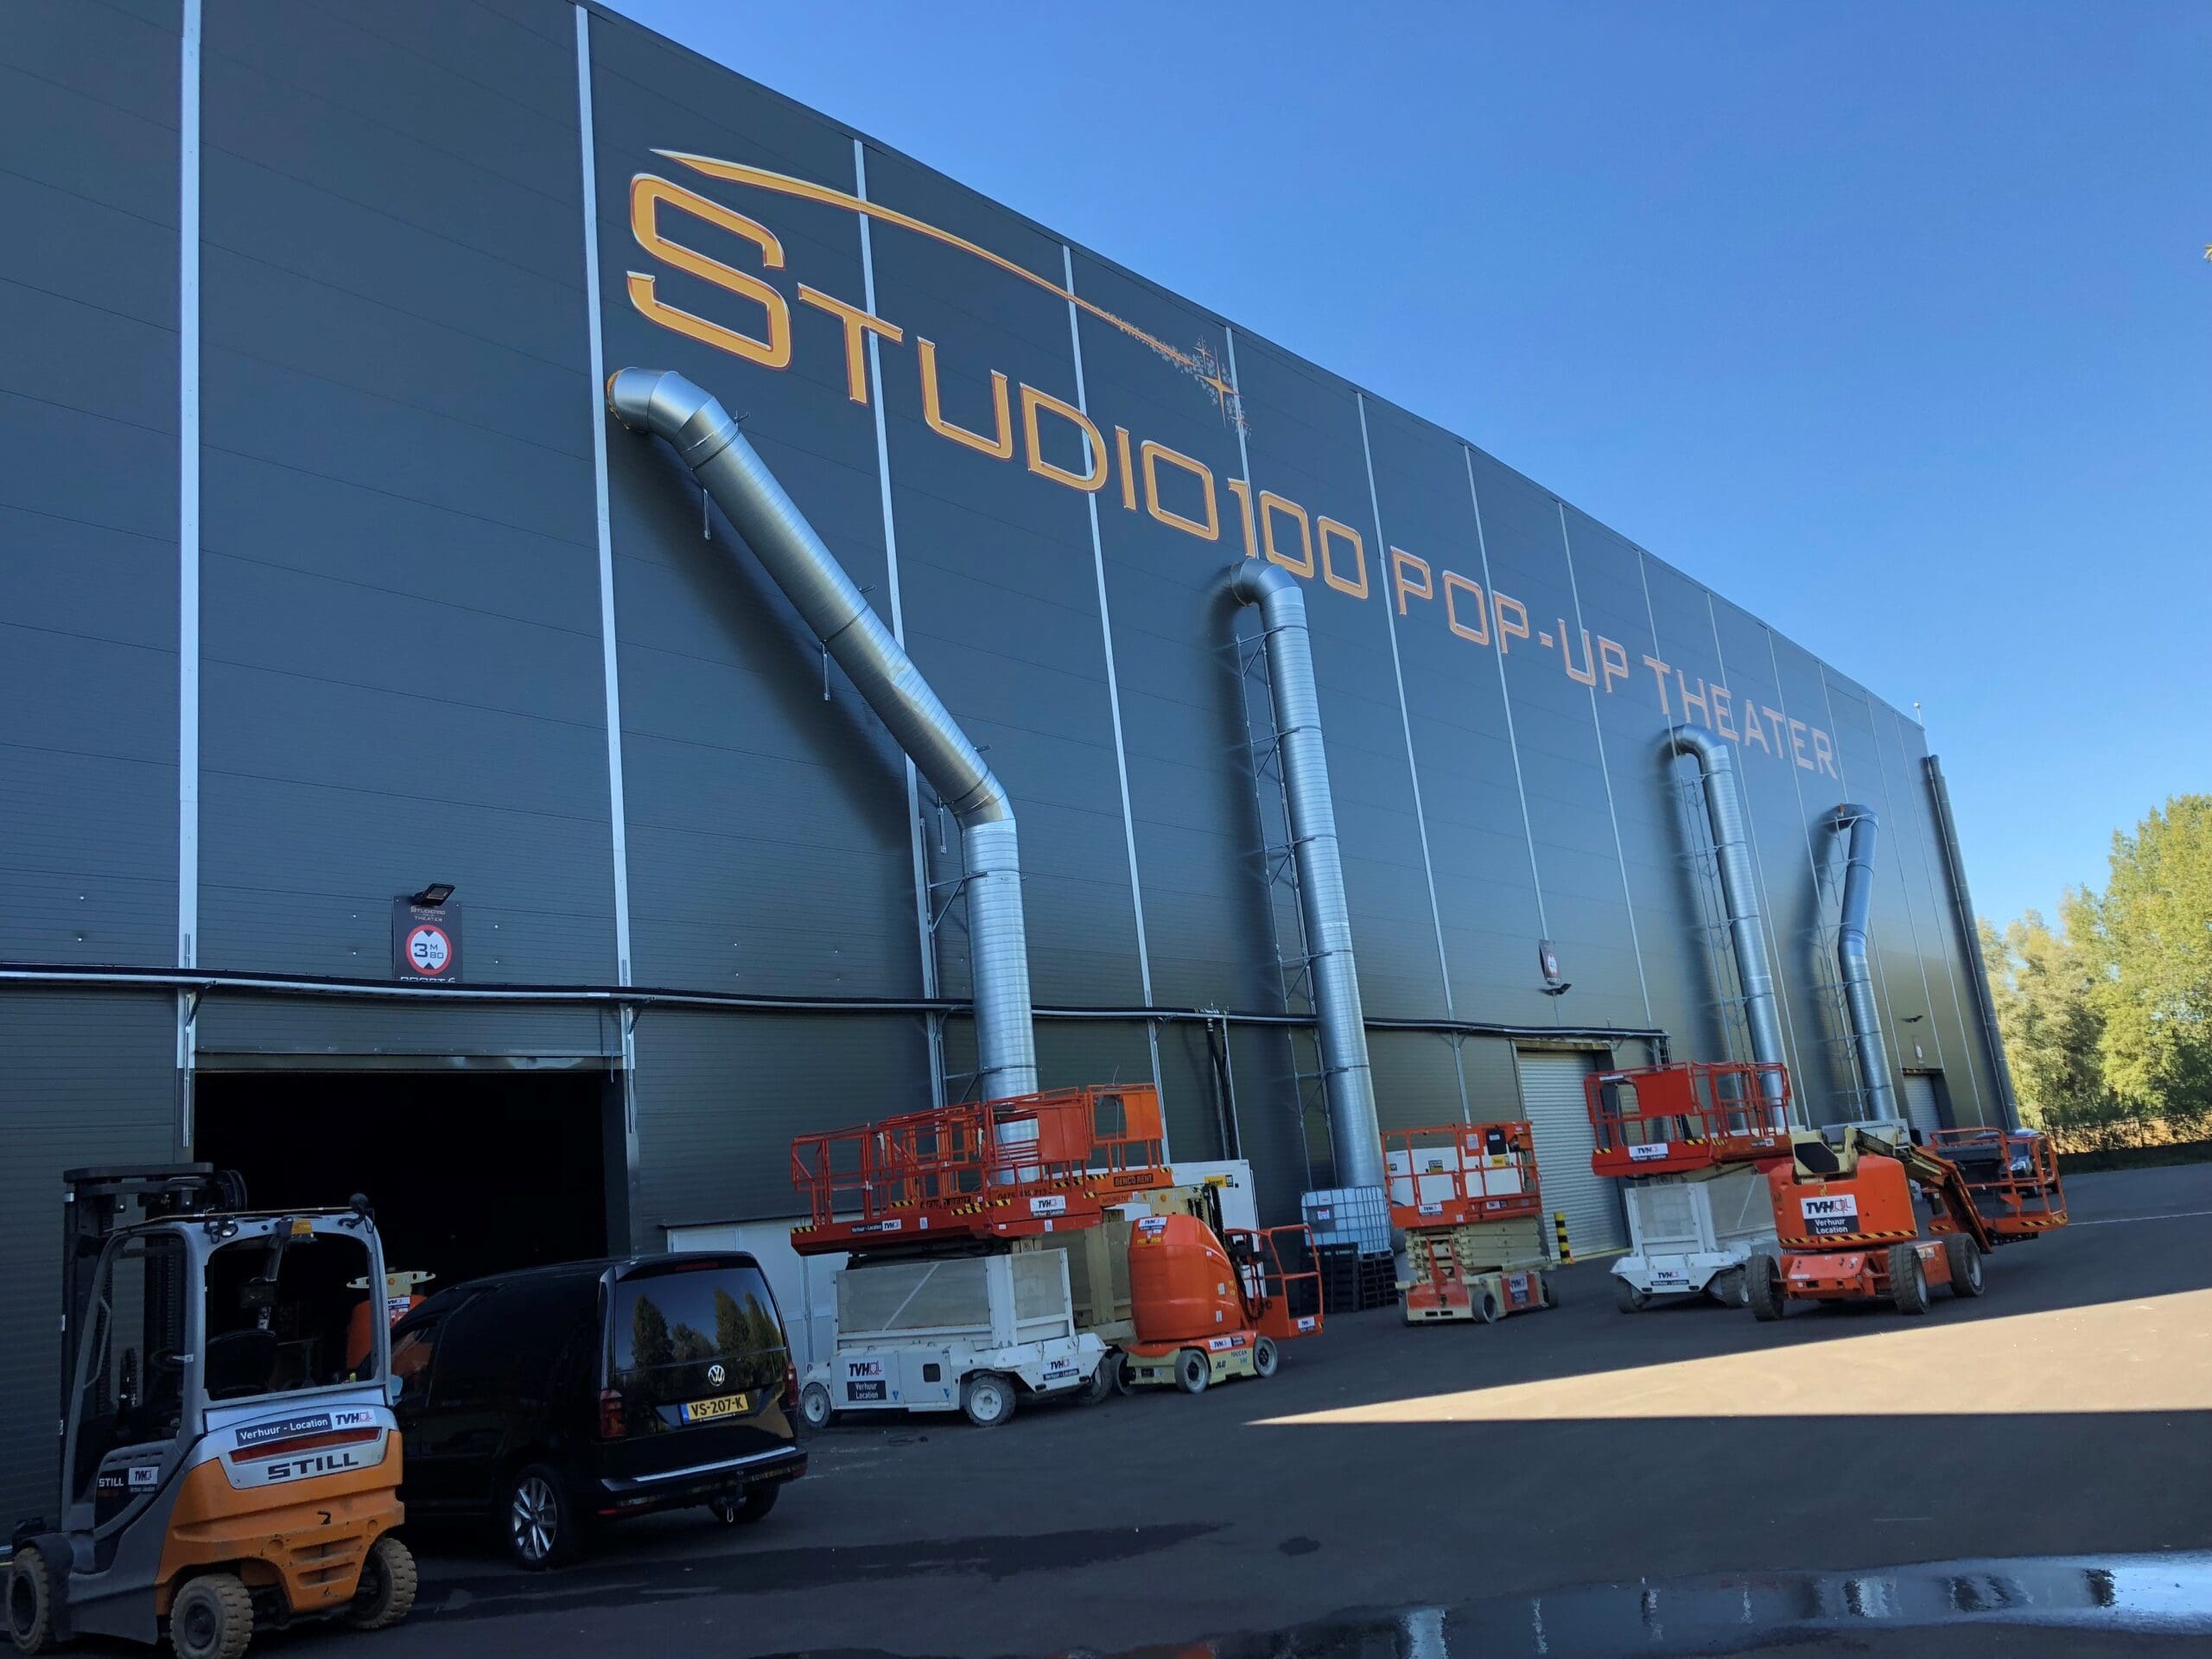 Studio 100 – Europe’s Largest Pop-Up Theatre